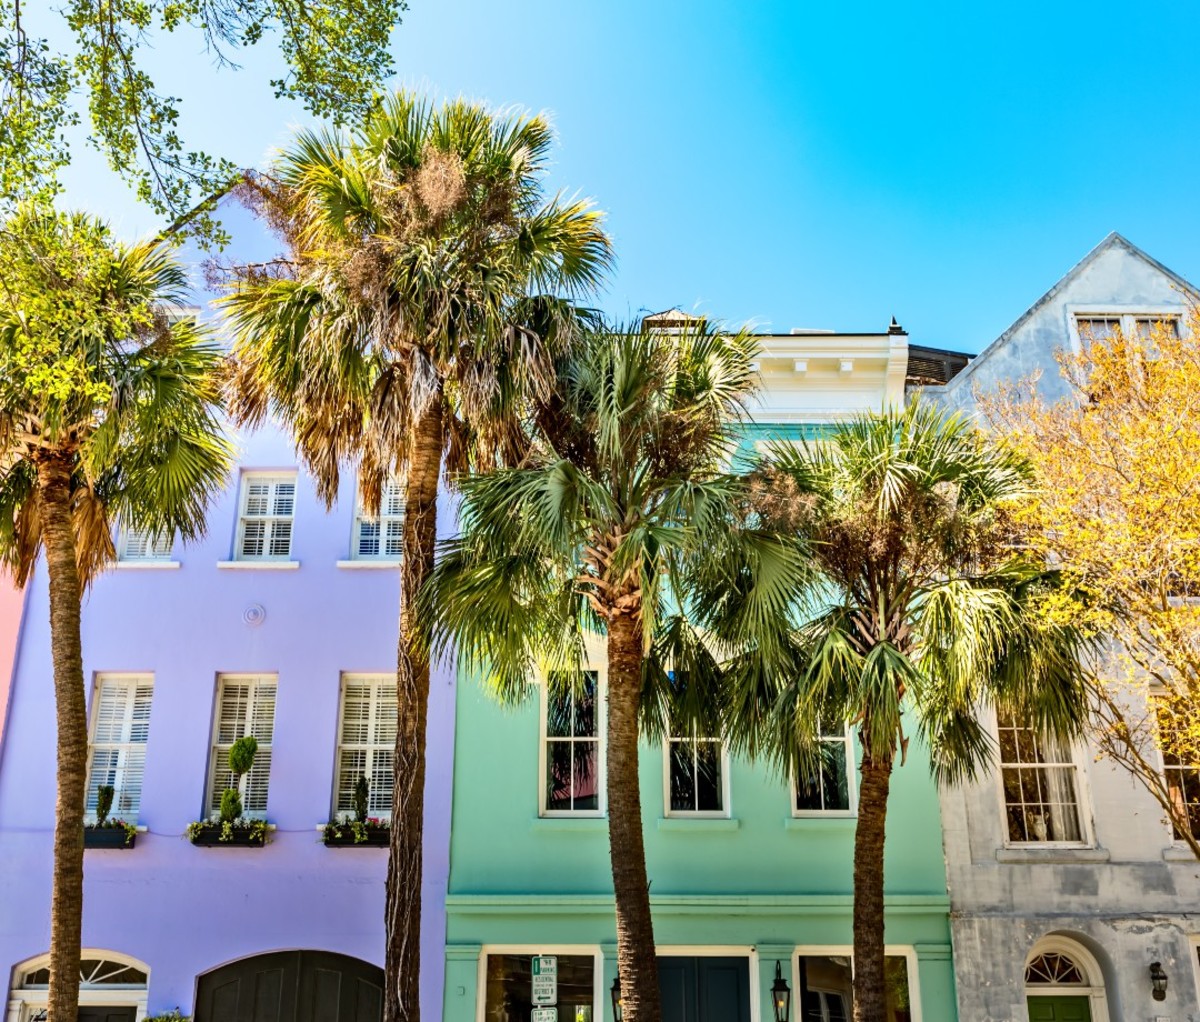 A row of colorful homes in Charleston, South Carolina